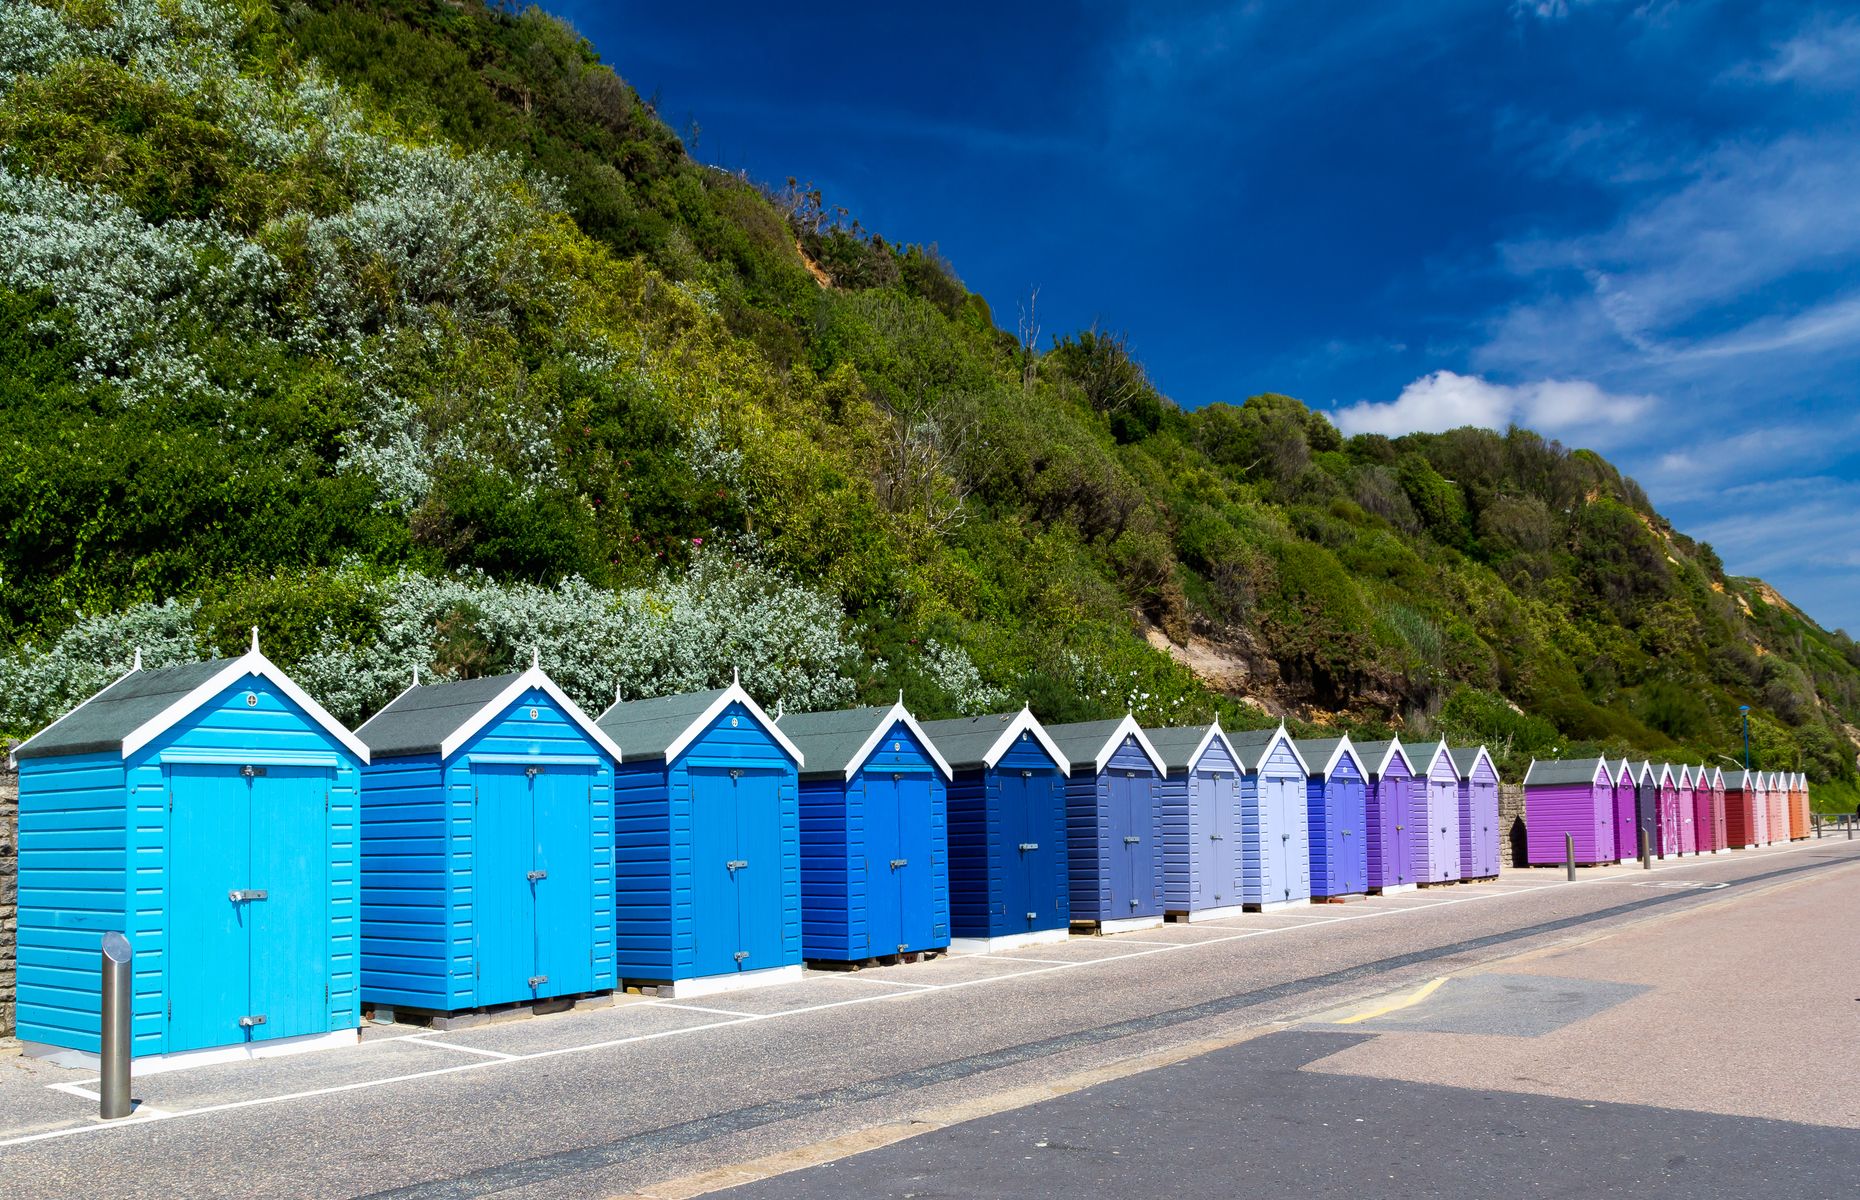 Beach huts in Bournemouth, England (Image: ian woolcock/Shutterstock)